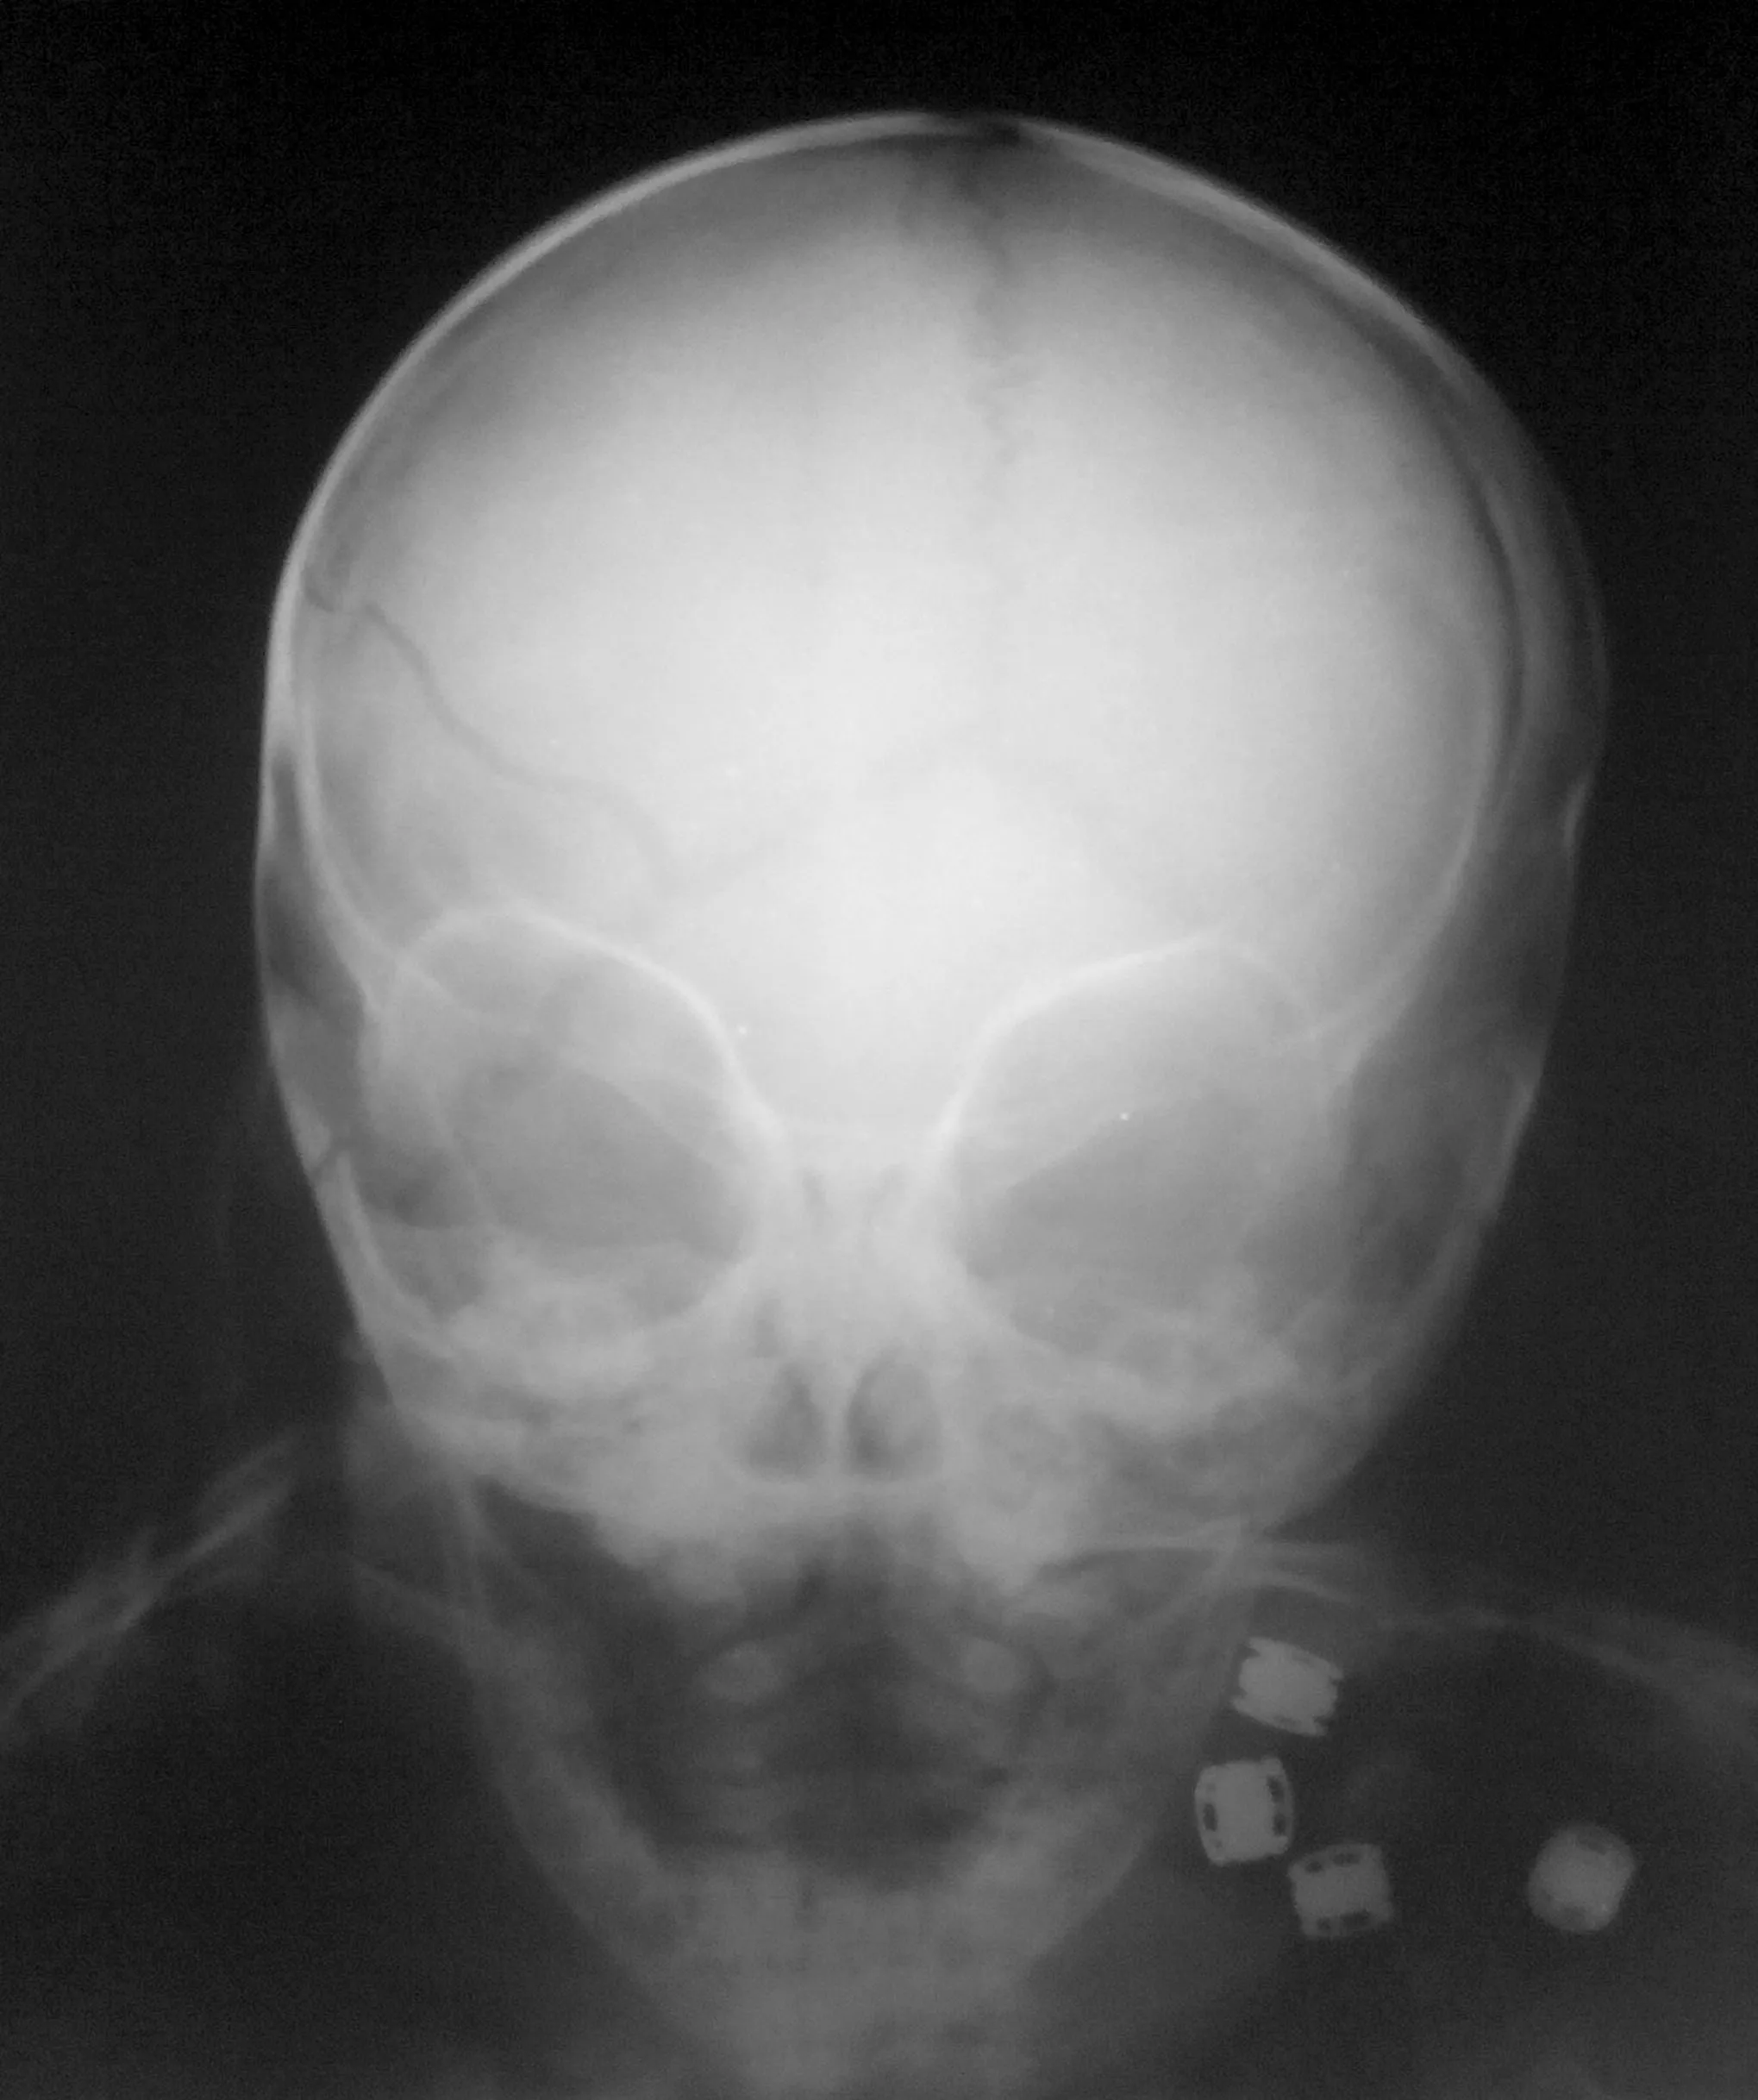 Детский череп фото. Рентгенограмма черепа ребенка. Снимок черепа с пояснениями.